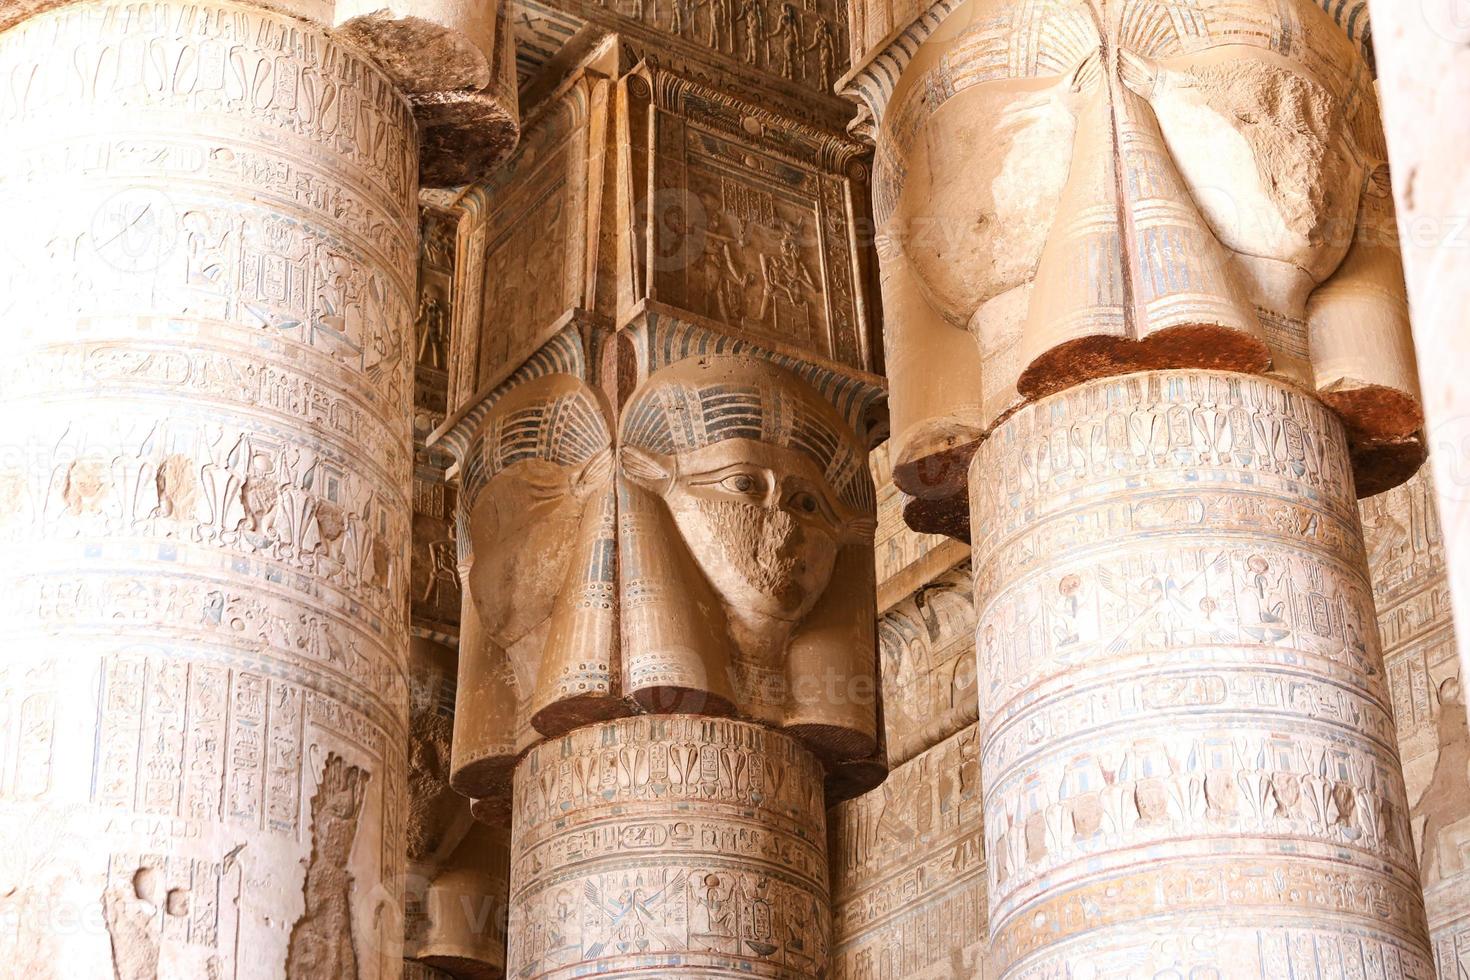 Columns in Denderah Temple, Qena, Egypt photo